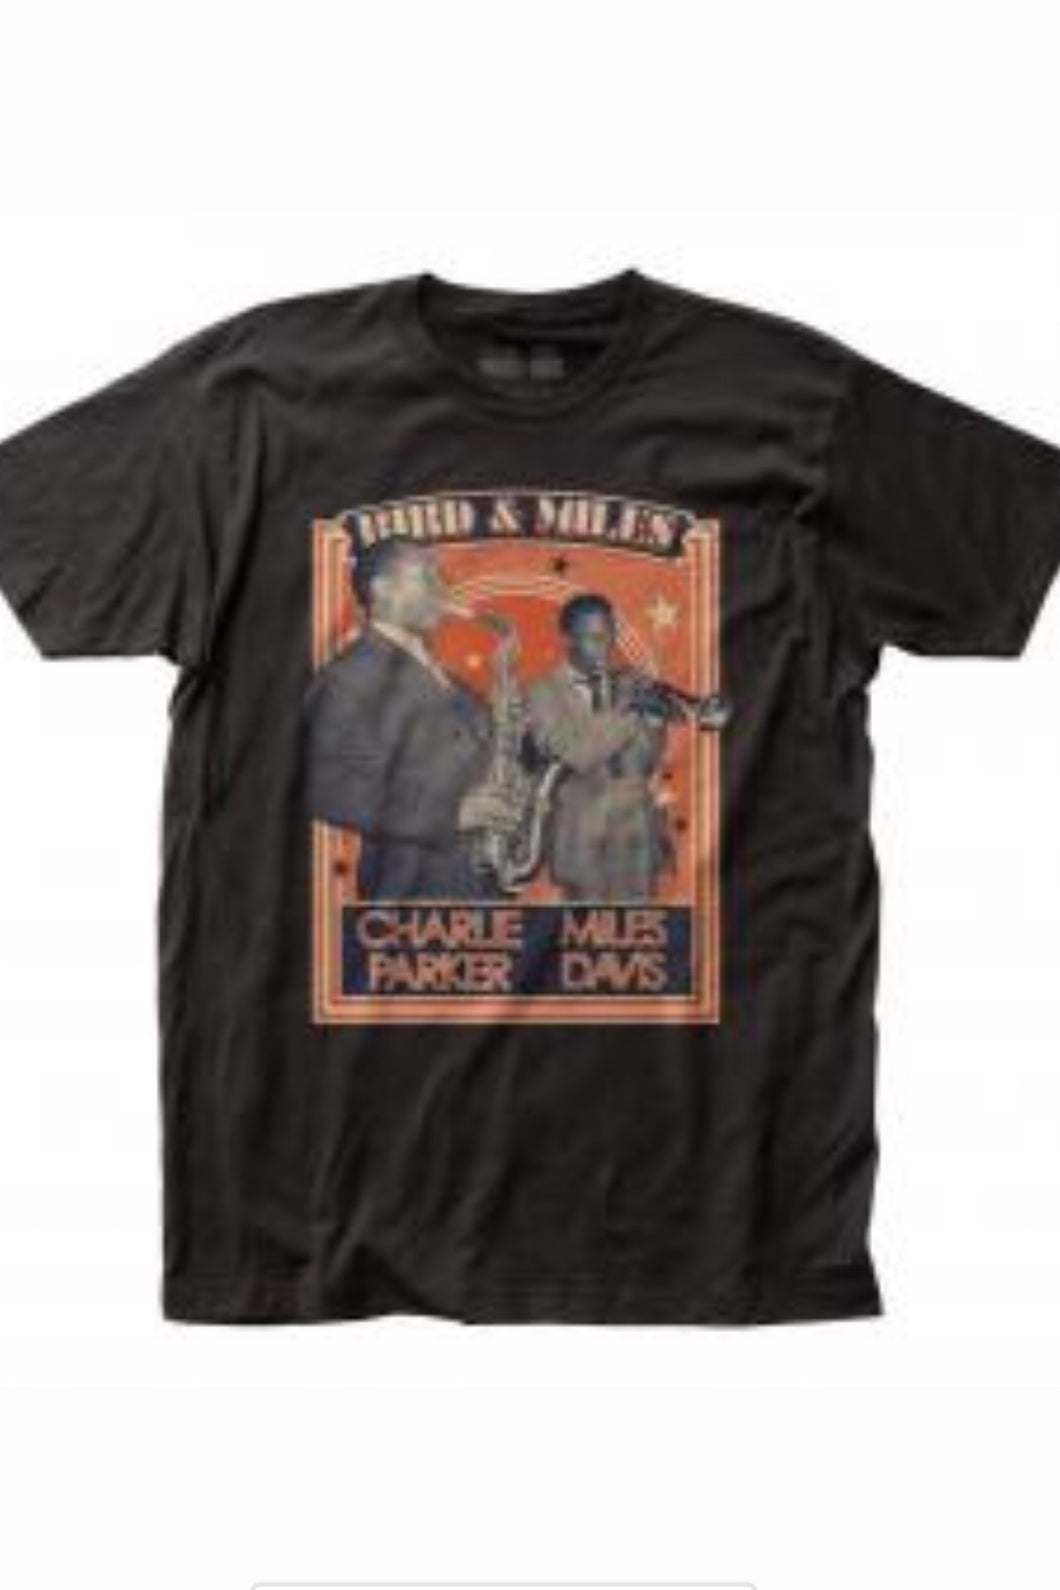 Miles Davis & Charlie Parker Classic Limited Qty